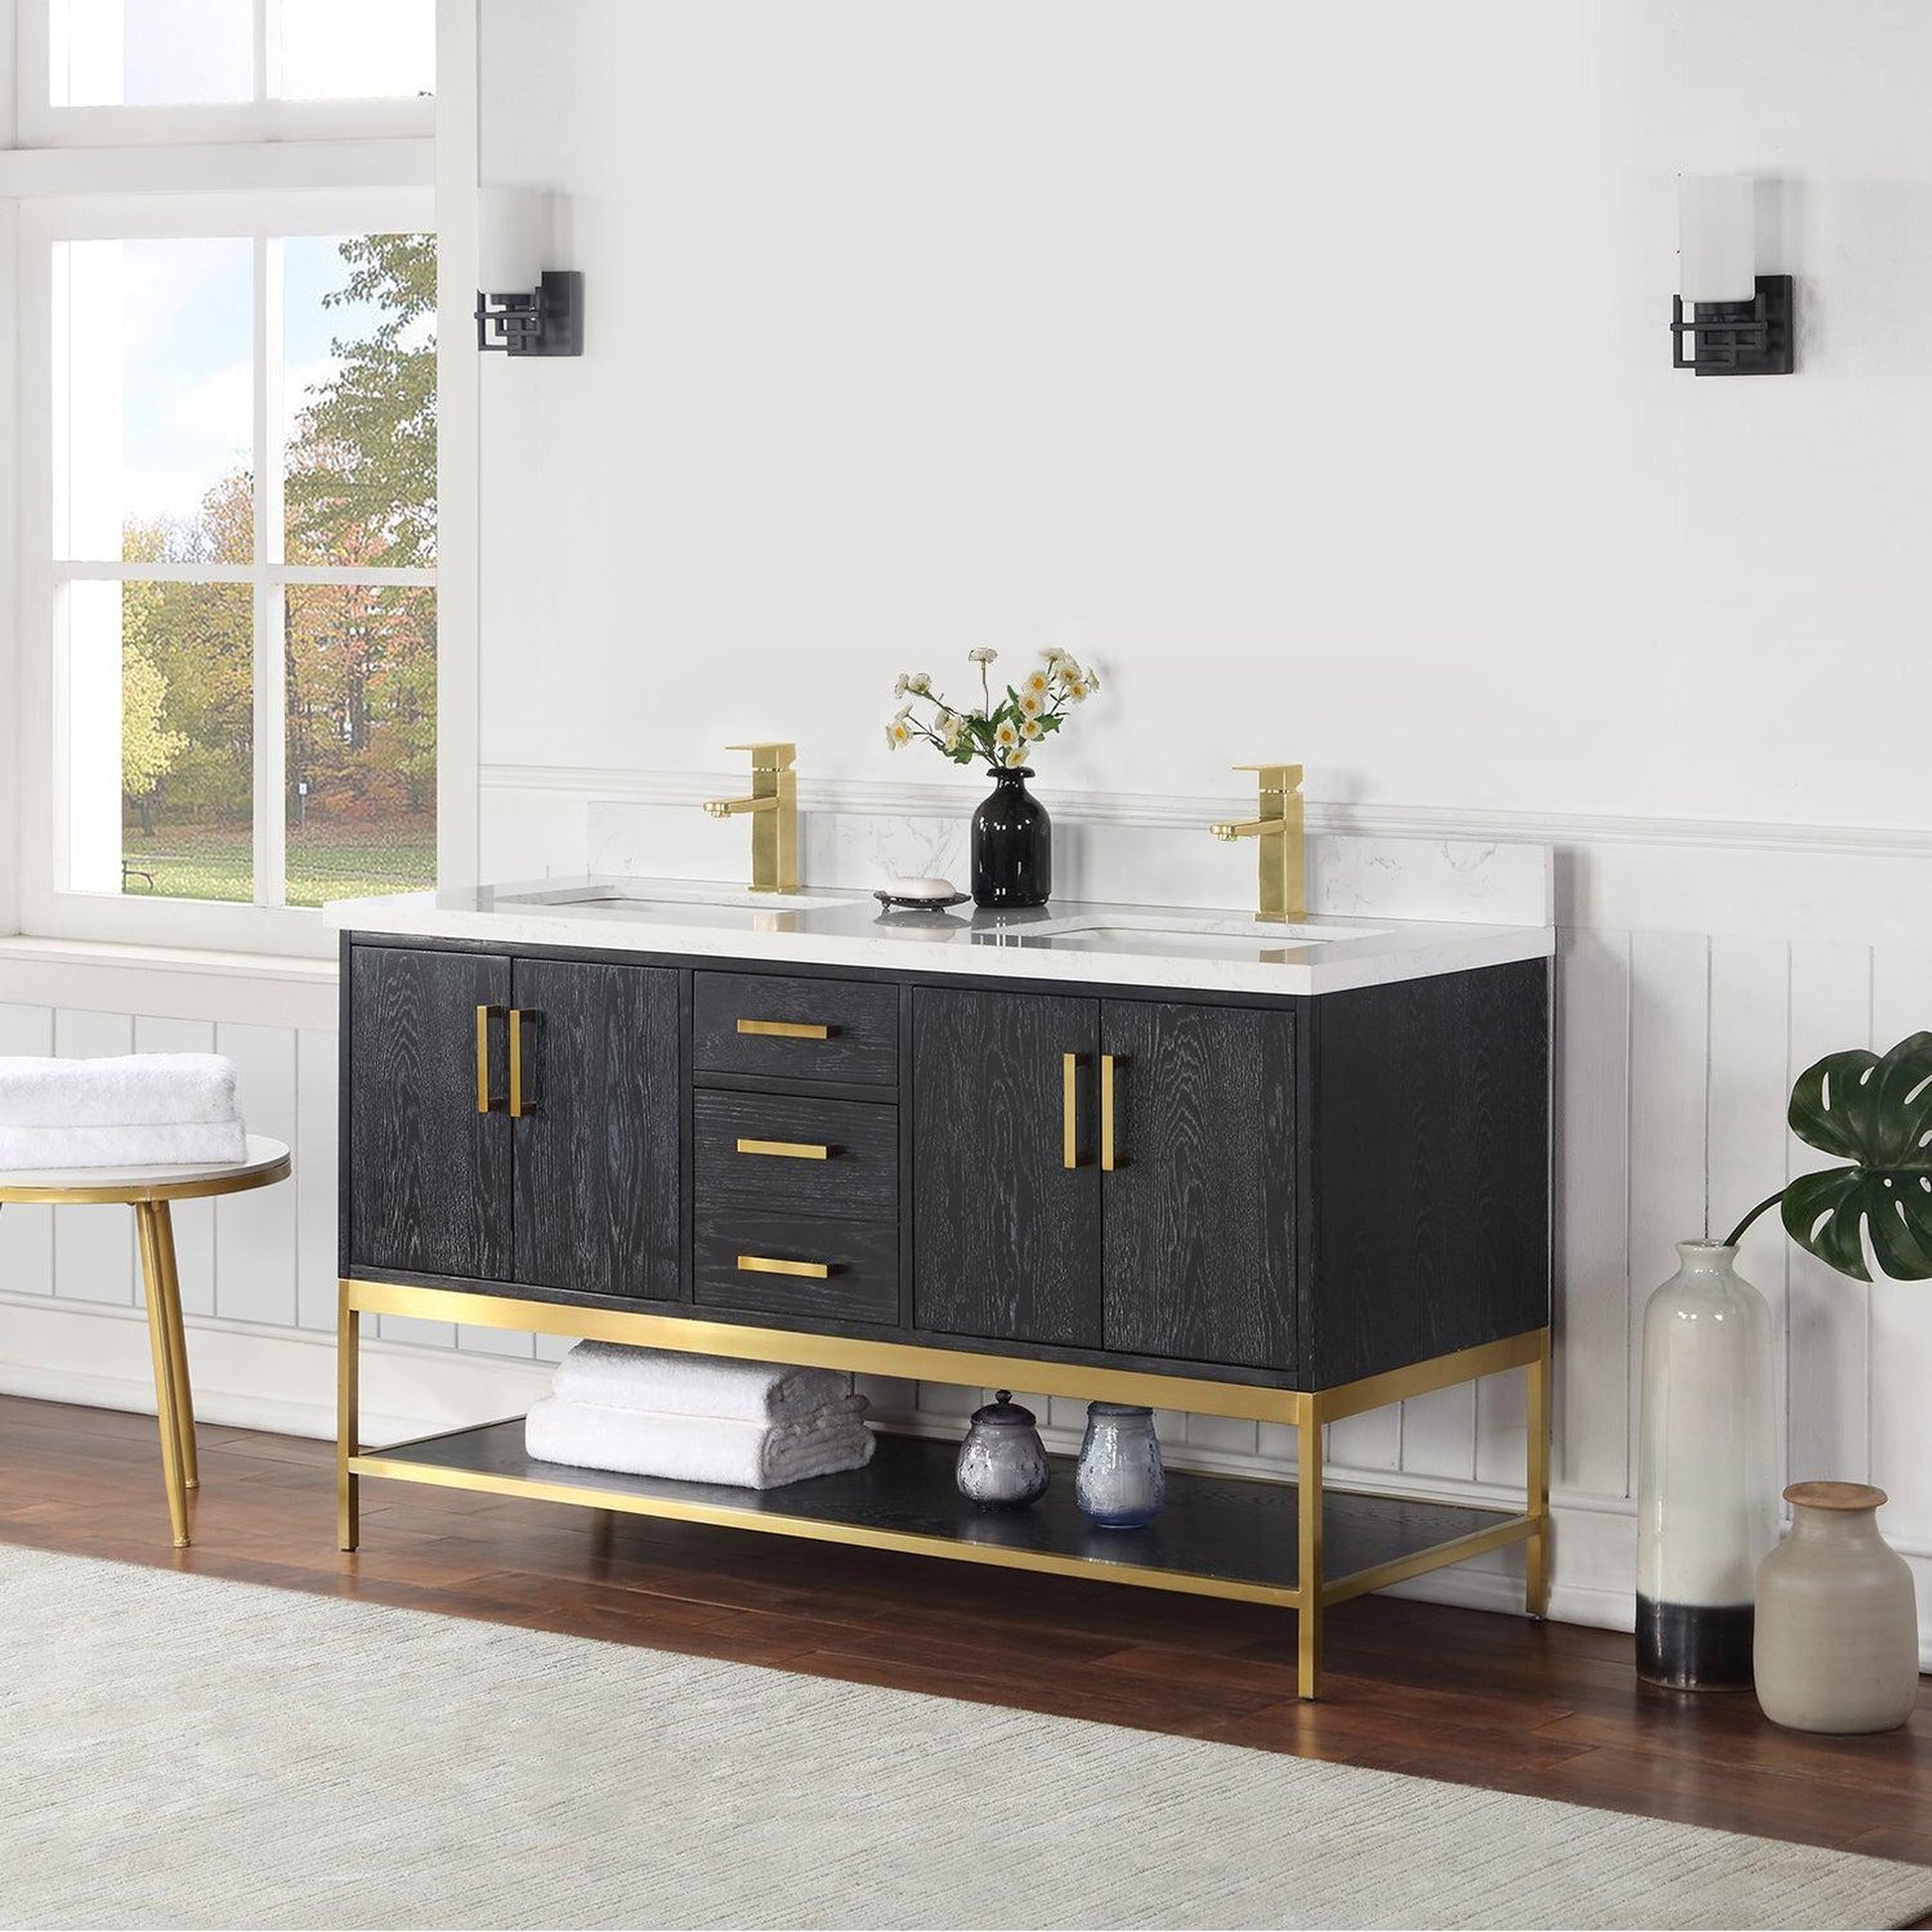 Altair Wildy 60" Black Oak Freestanding Double Bathroom Vanity Set With Stylish Composite Grain White Stone Top, Two Rectangular Undermount Ceramic Sinks, Overflow, and Backsplash